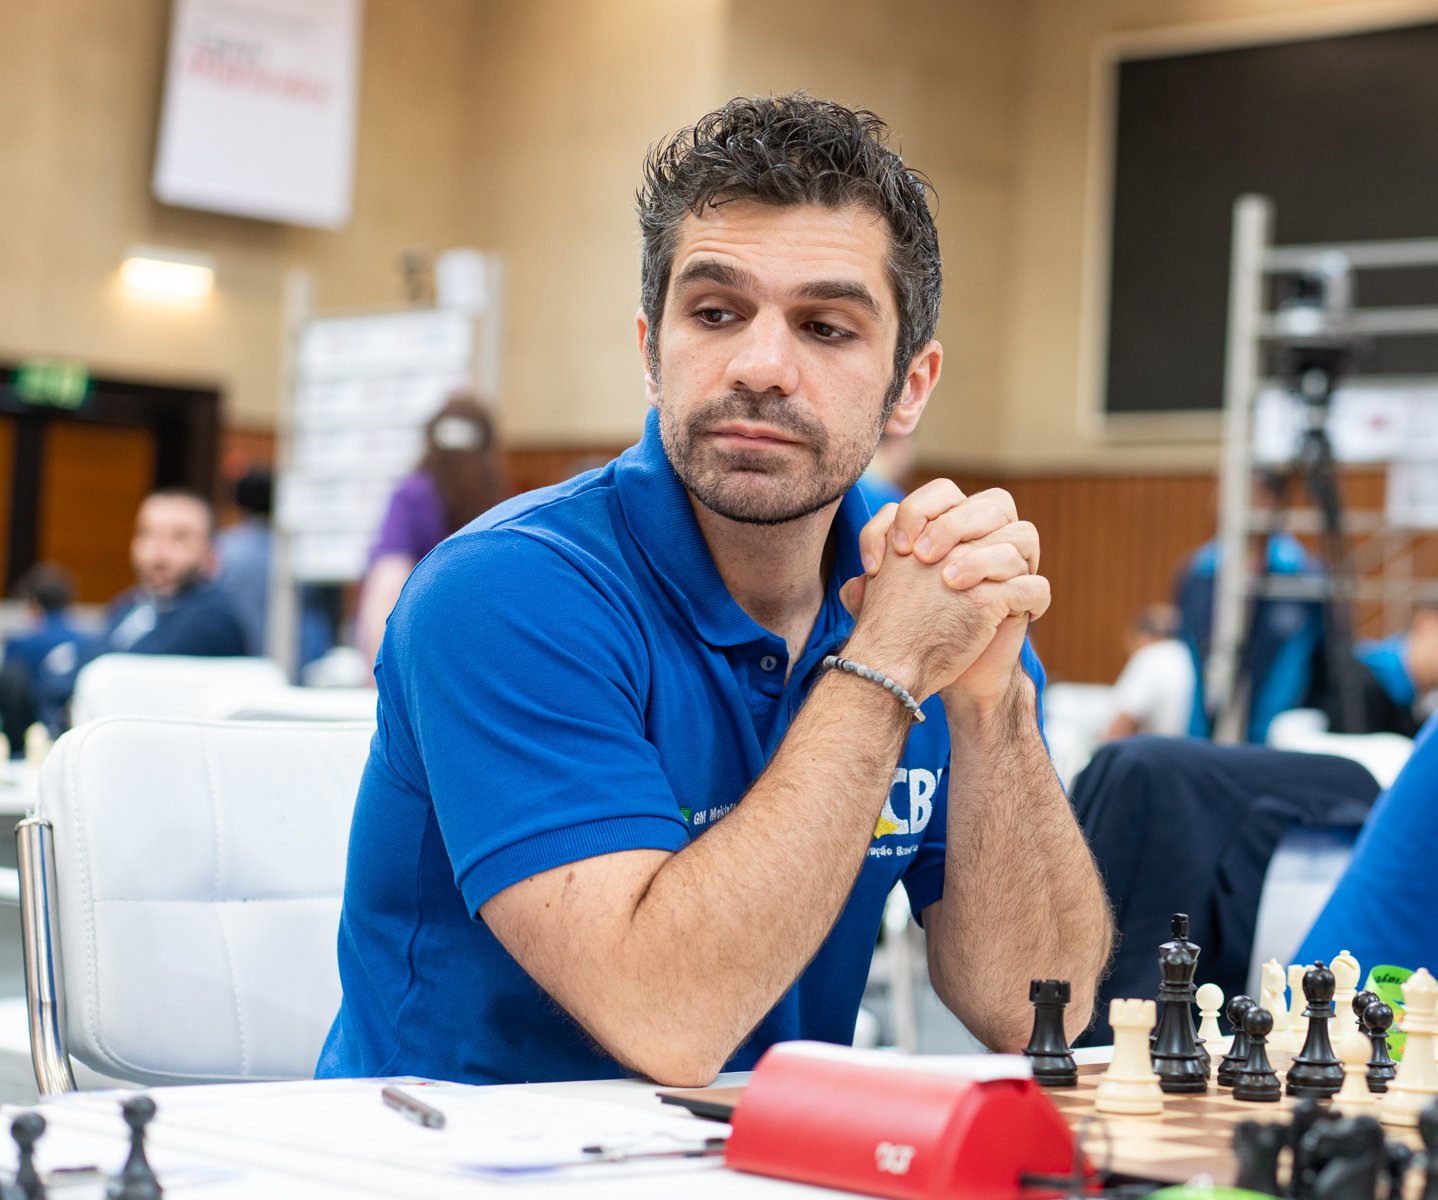 Chess.com Português on X: 🏆 Olimpíada de Xadrez 2022 🇮🇳 Chennai 💥  Resultados - Rodada 2  / X